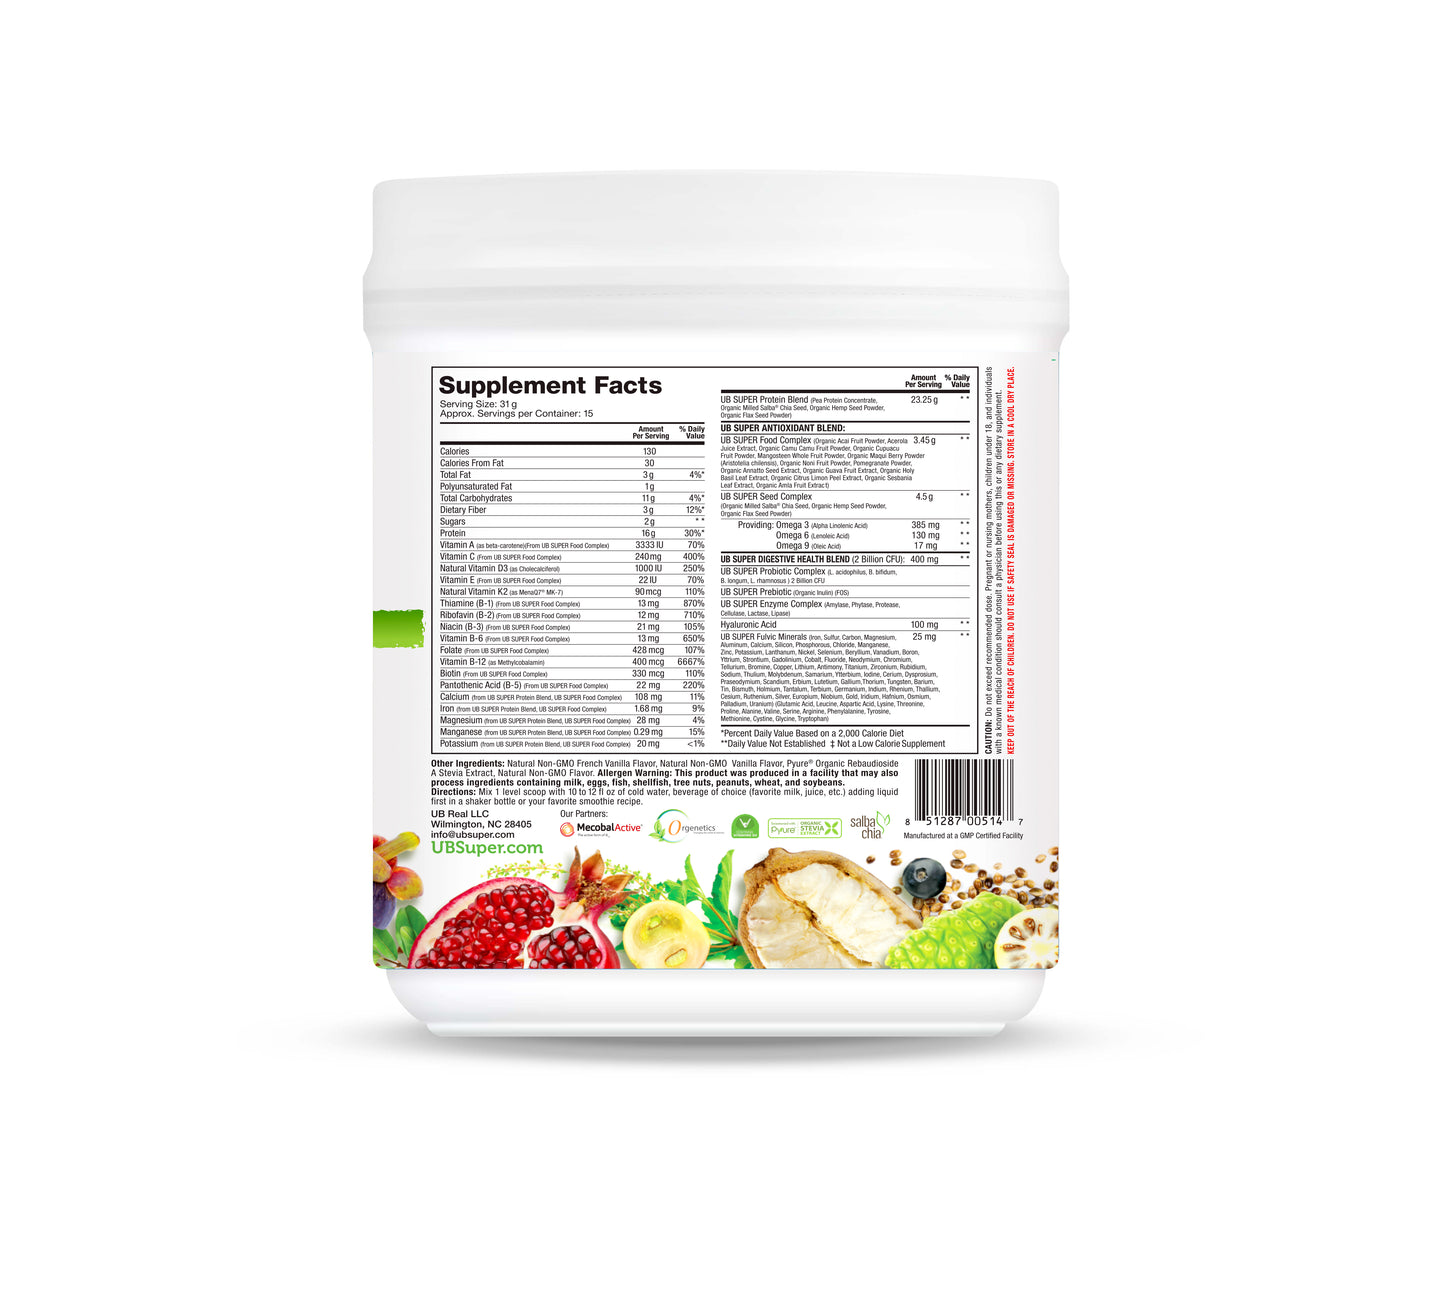 Plant Based Protein Superfood Nutritional Shake (Vanilla)